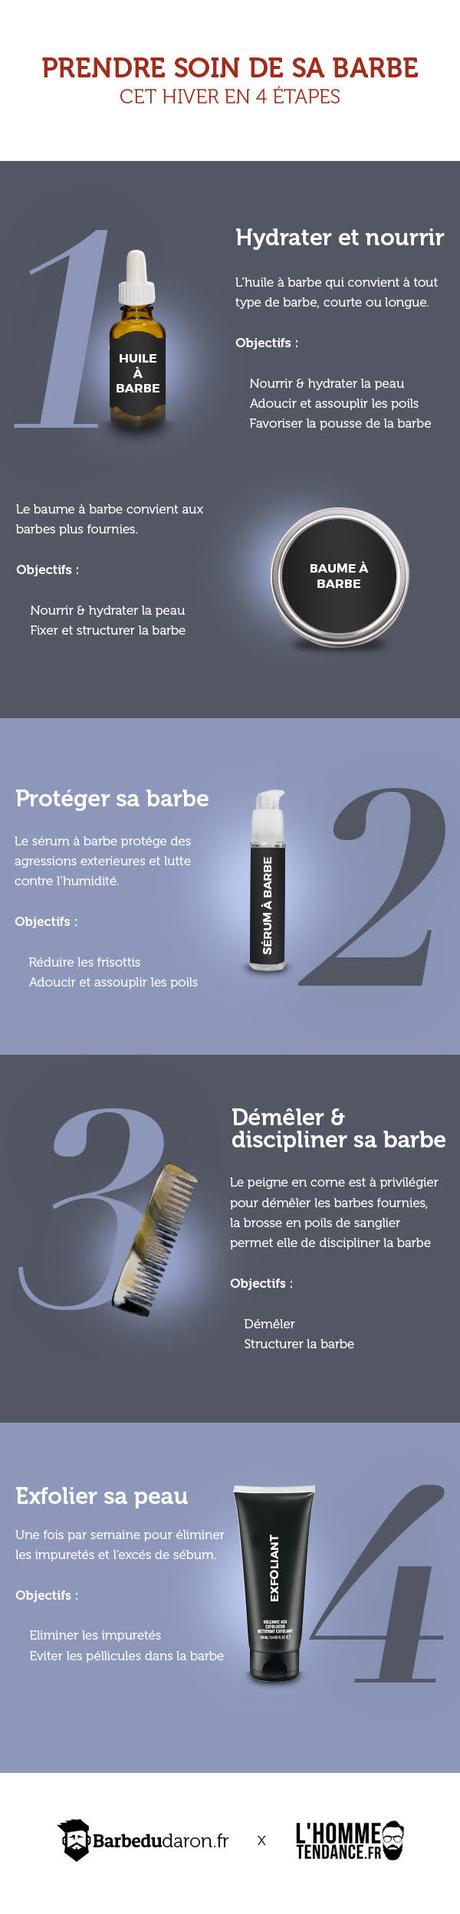 Prendre soin de sa barbe en 4 étapes (Infographie)